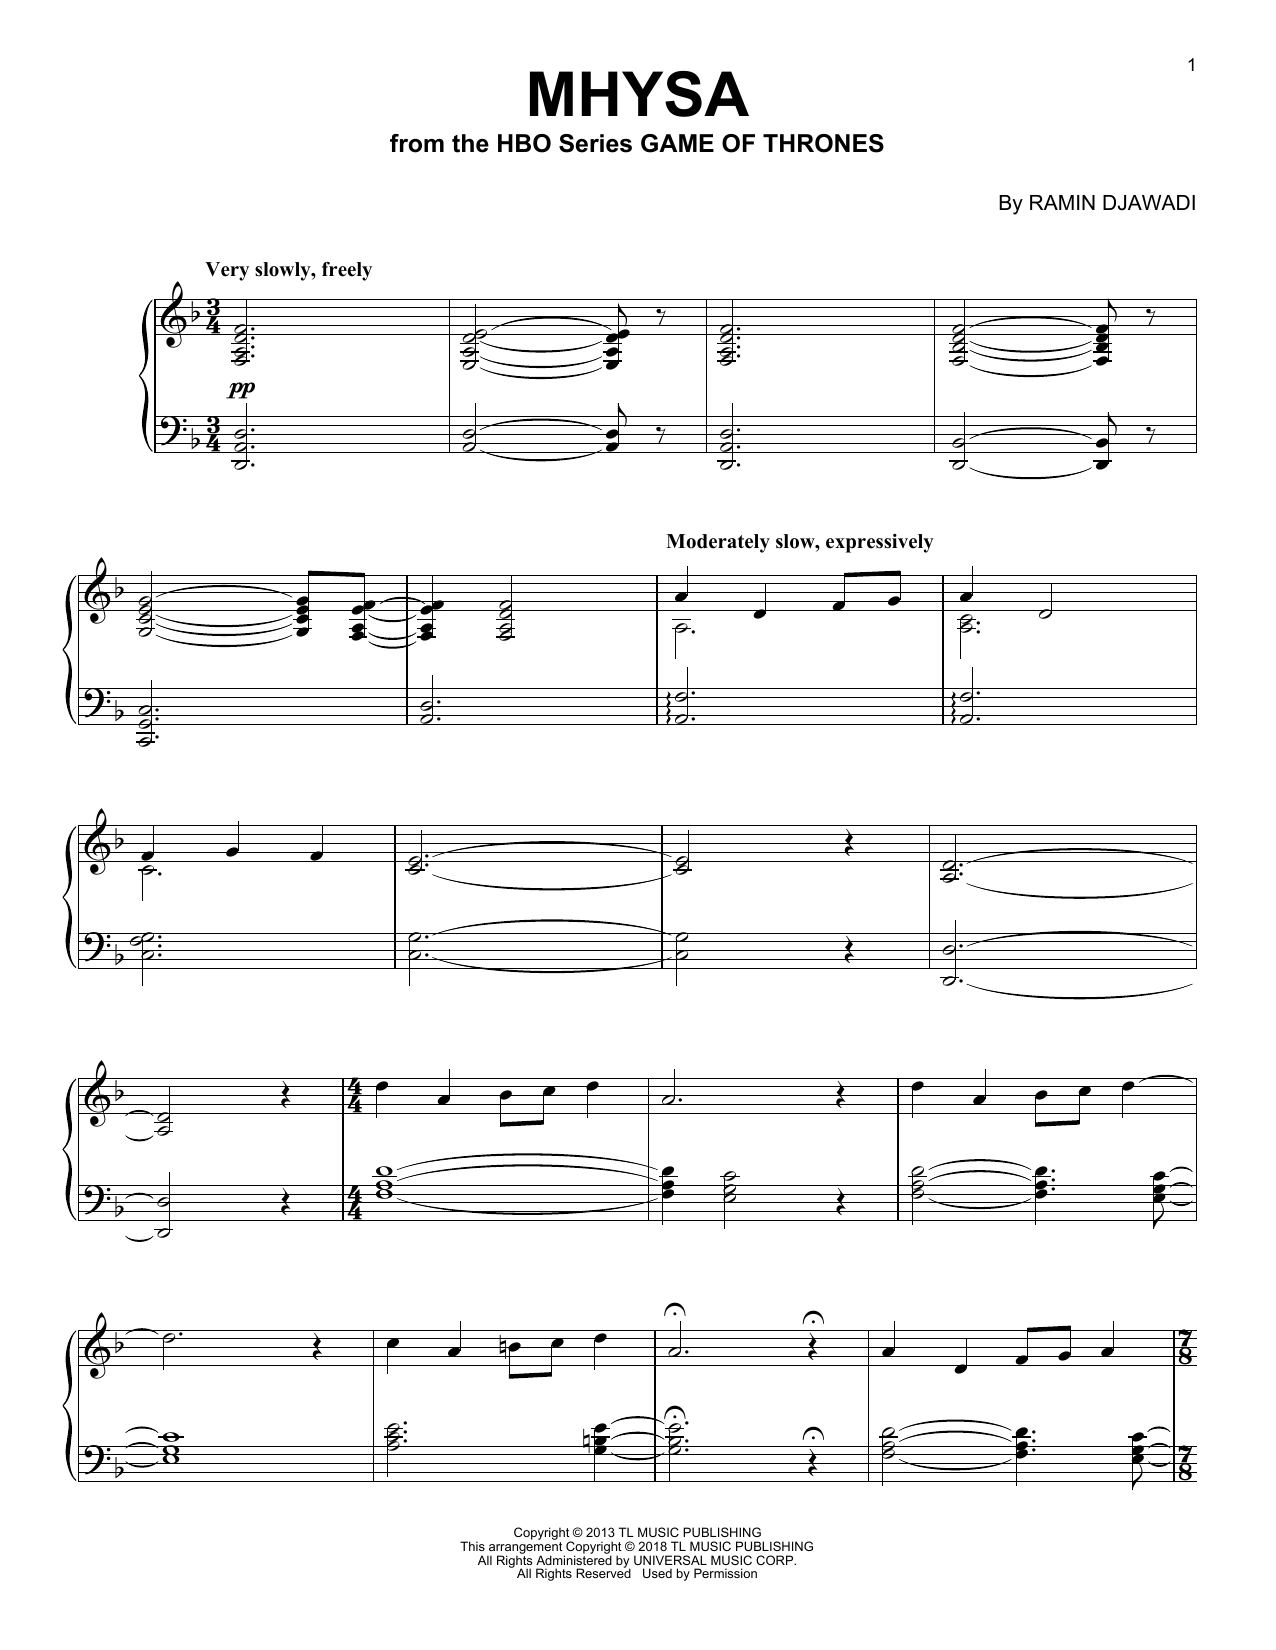 Ramin Djawadi Mhysa (from Game of Thrones) Sheet Music Notes & Chords for Piano - Download or Print PDF